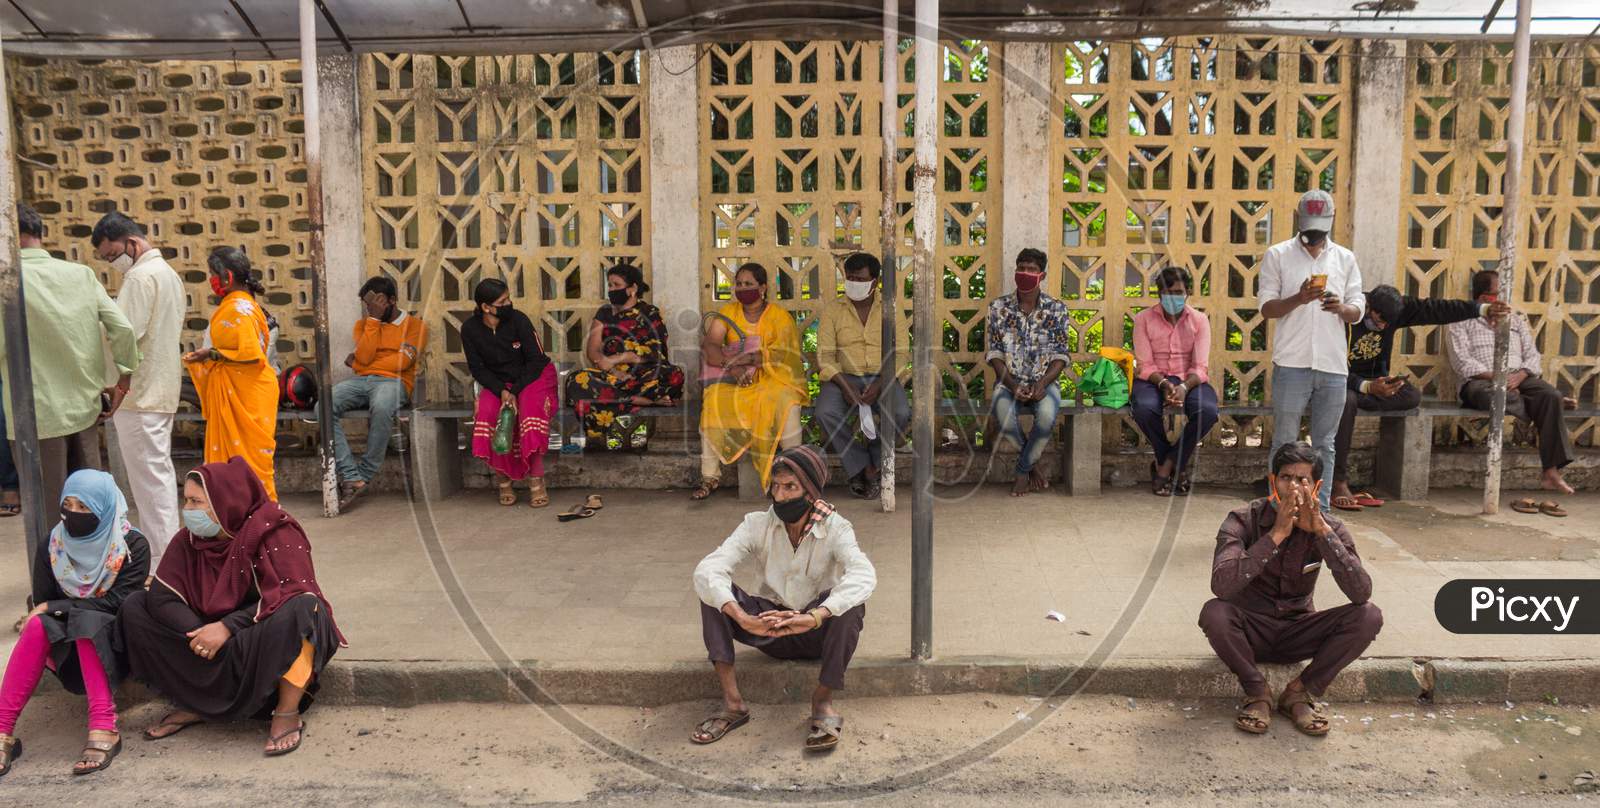 Patients waiting for Covid19 checkup in Mysore/Karnataka/India.